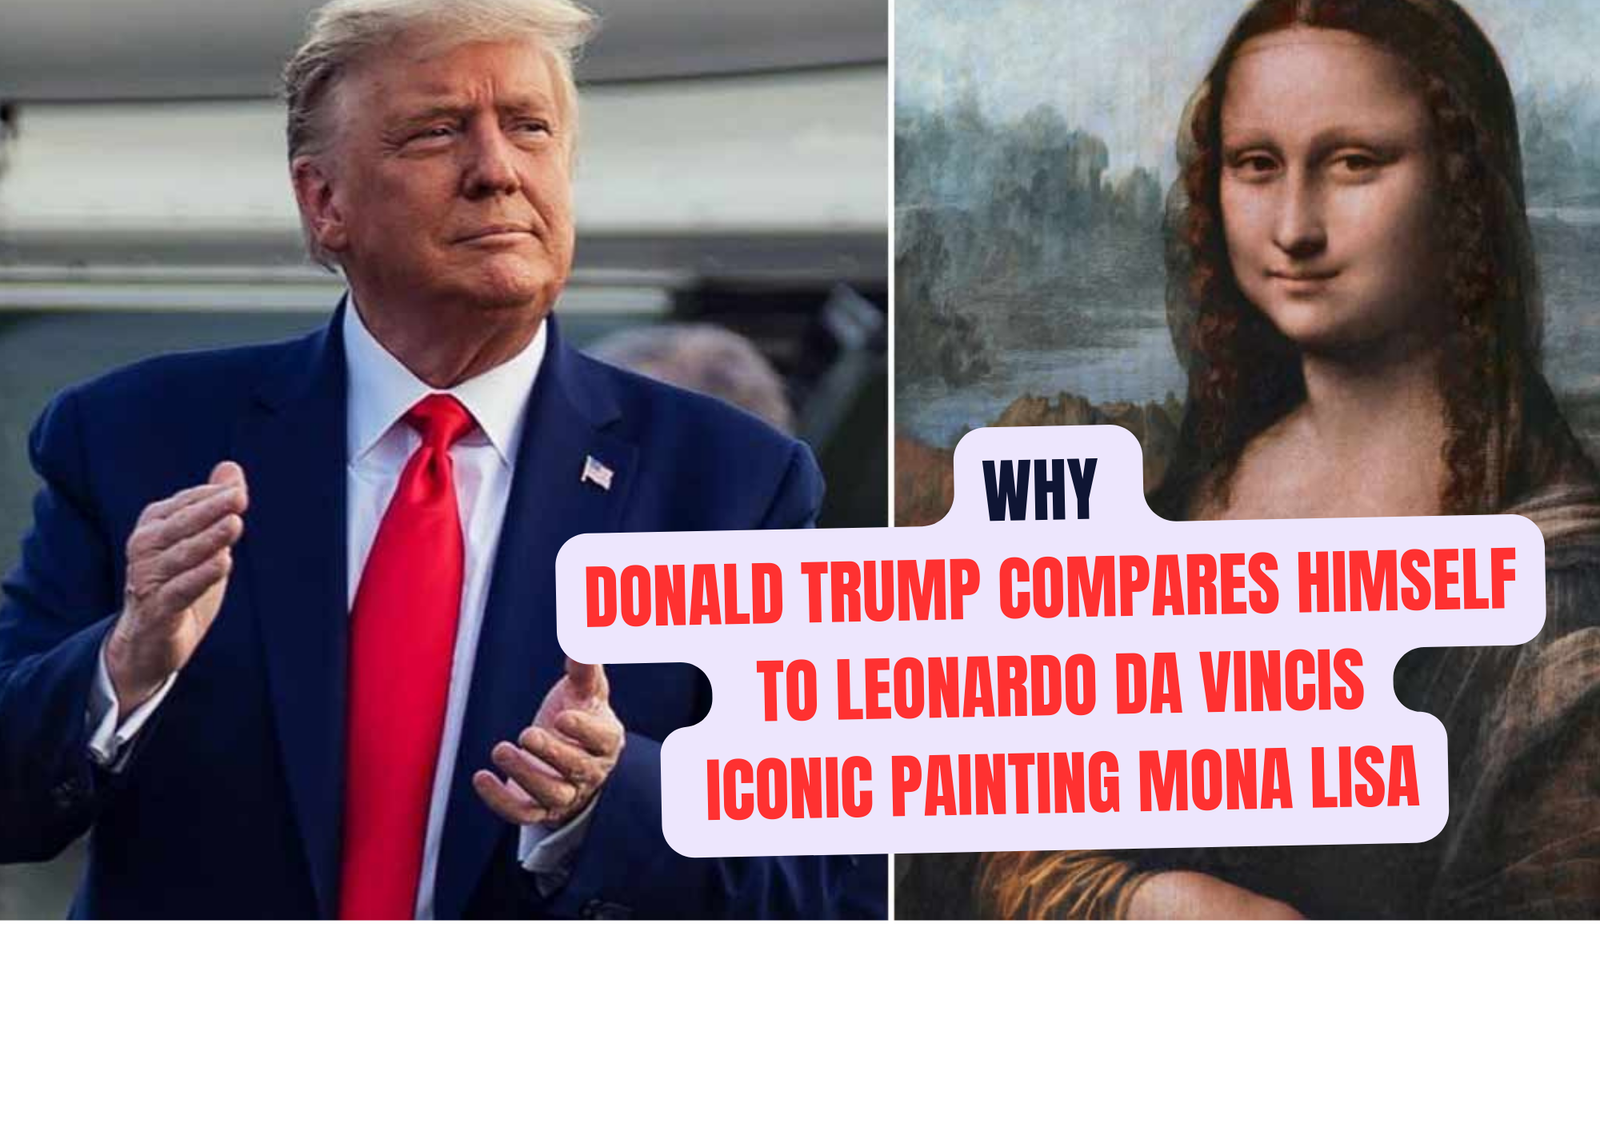 Donald Trump Compares Himself to Mona Lisa